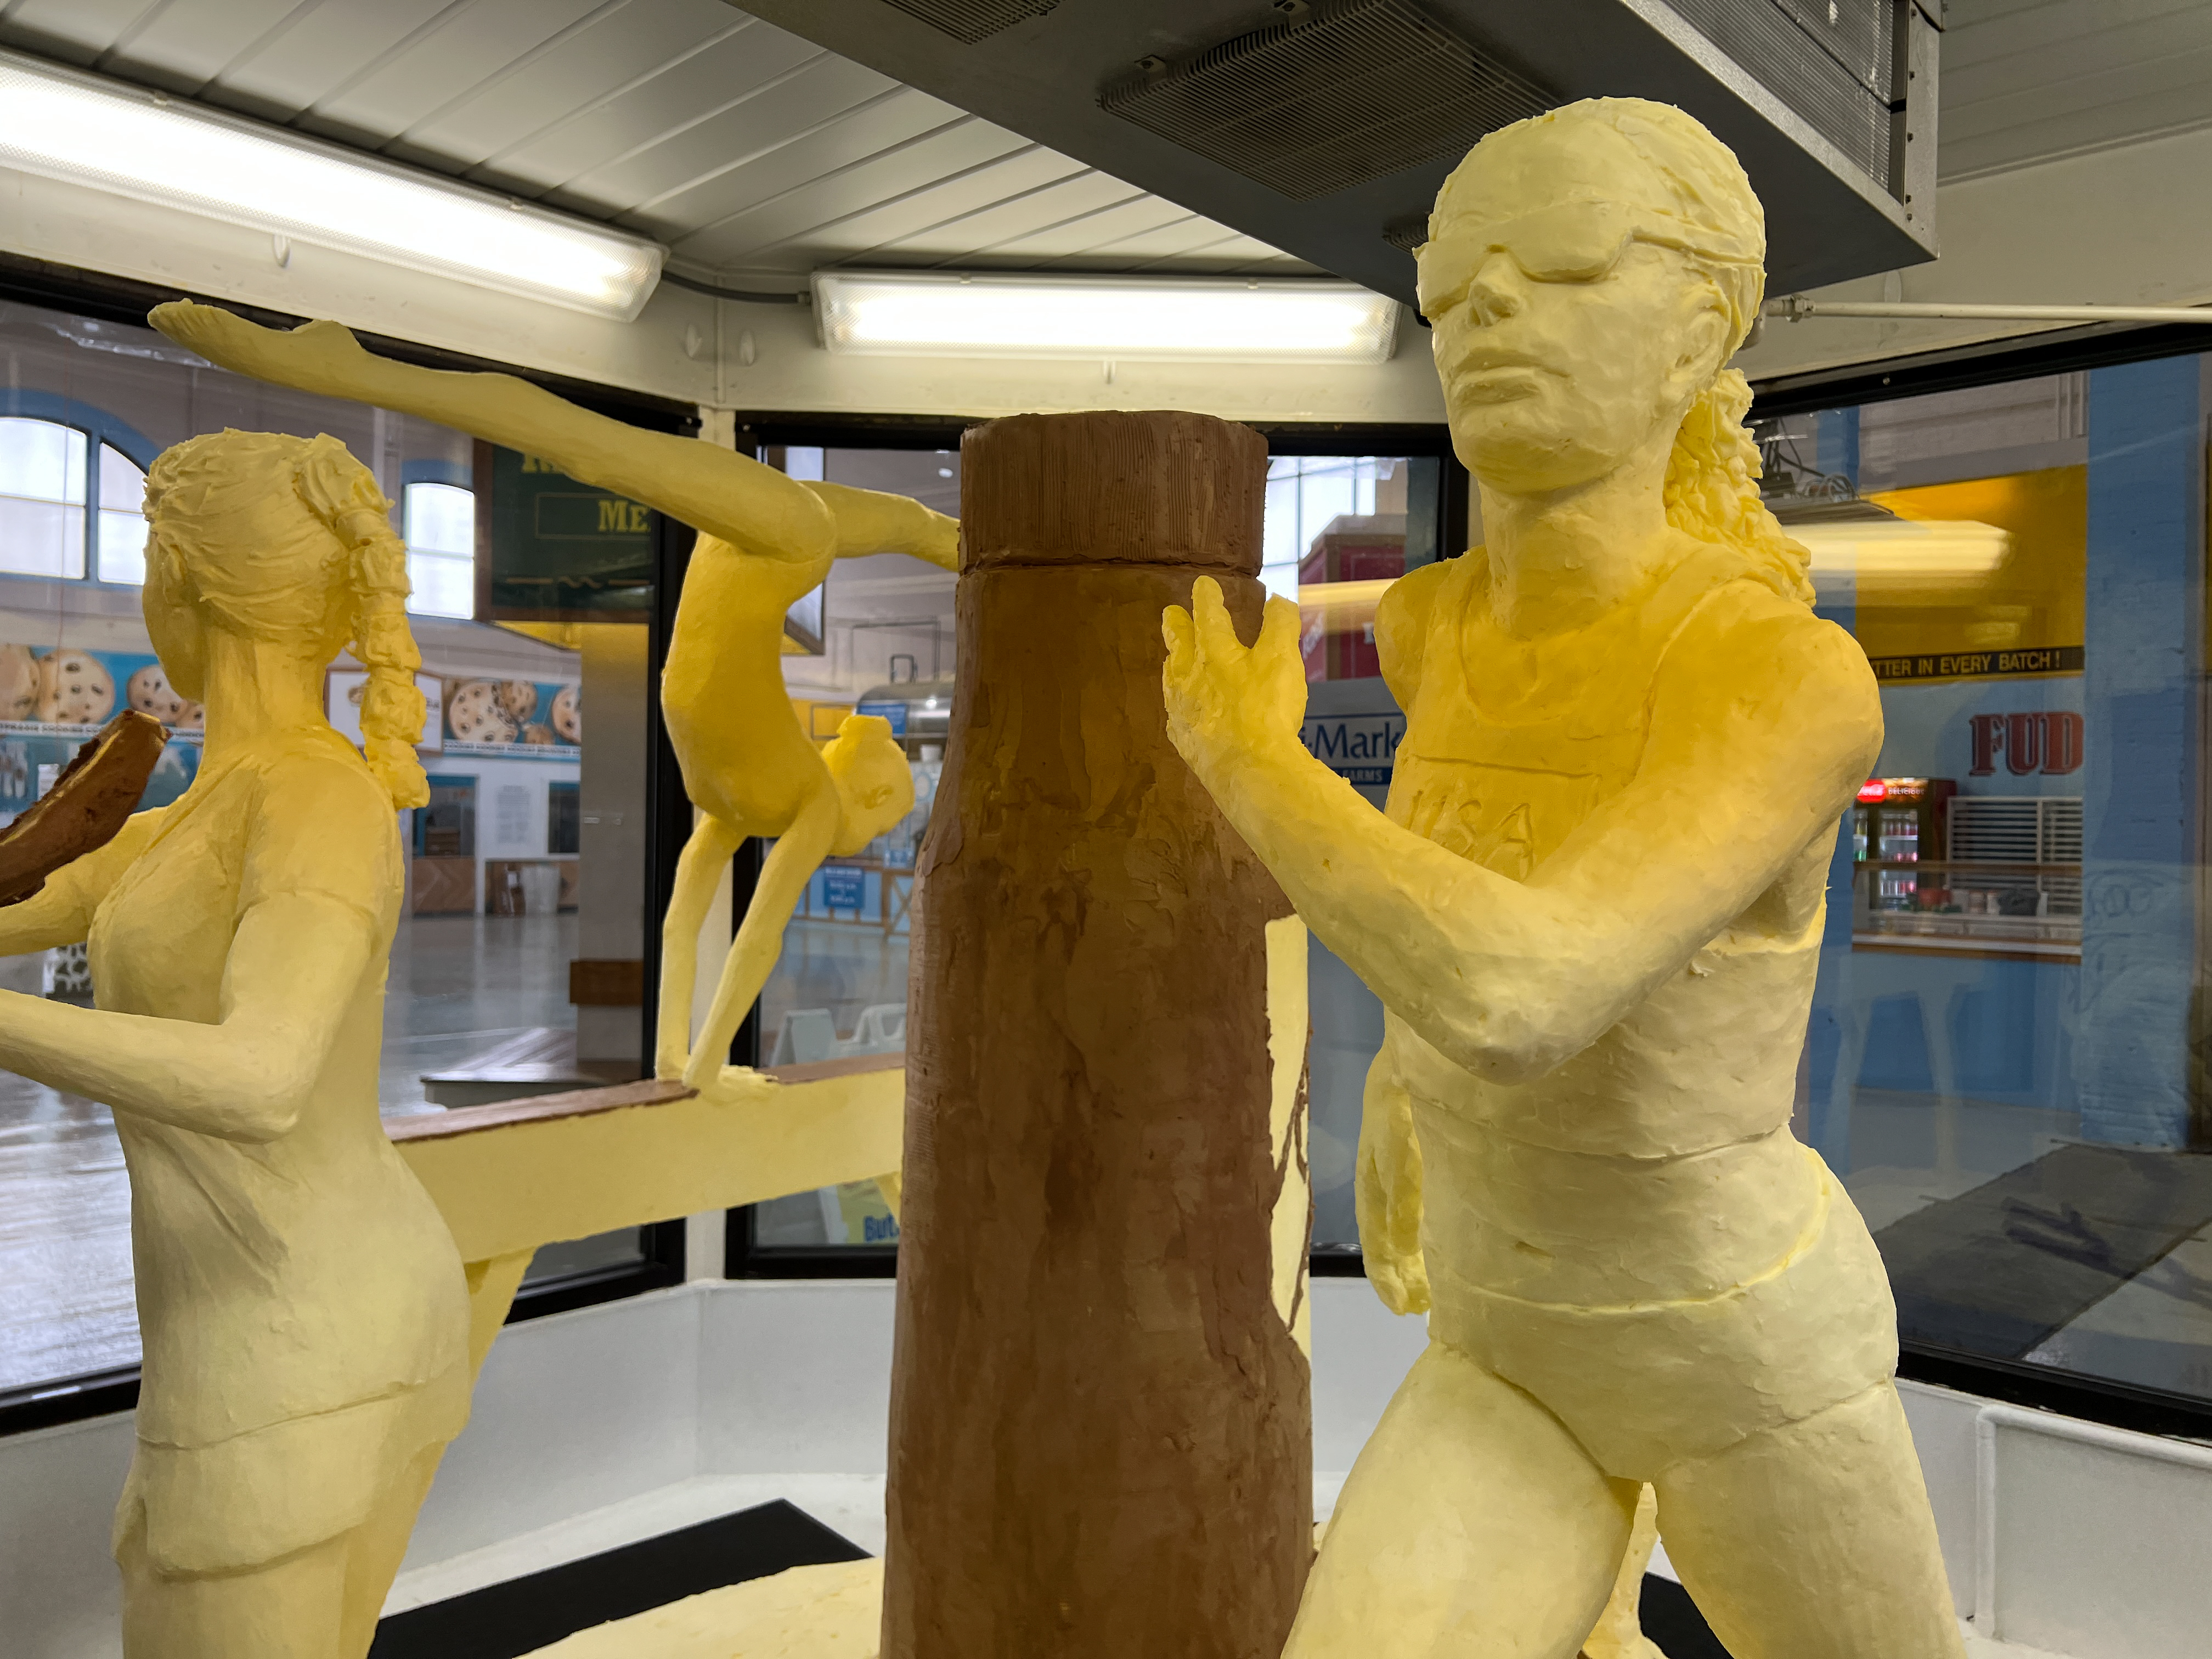 New York State Fair 2017 butter sculpture revealed 